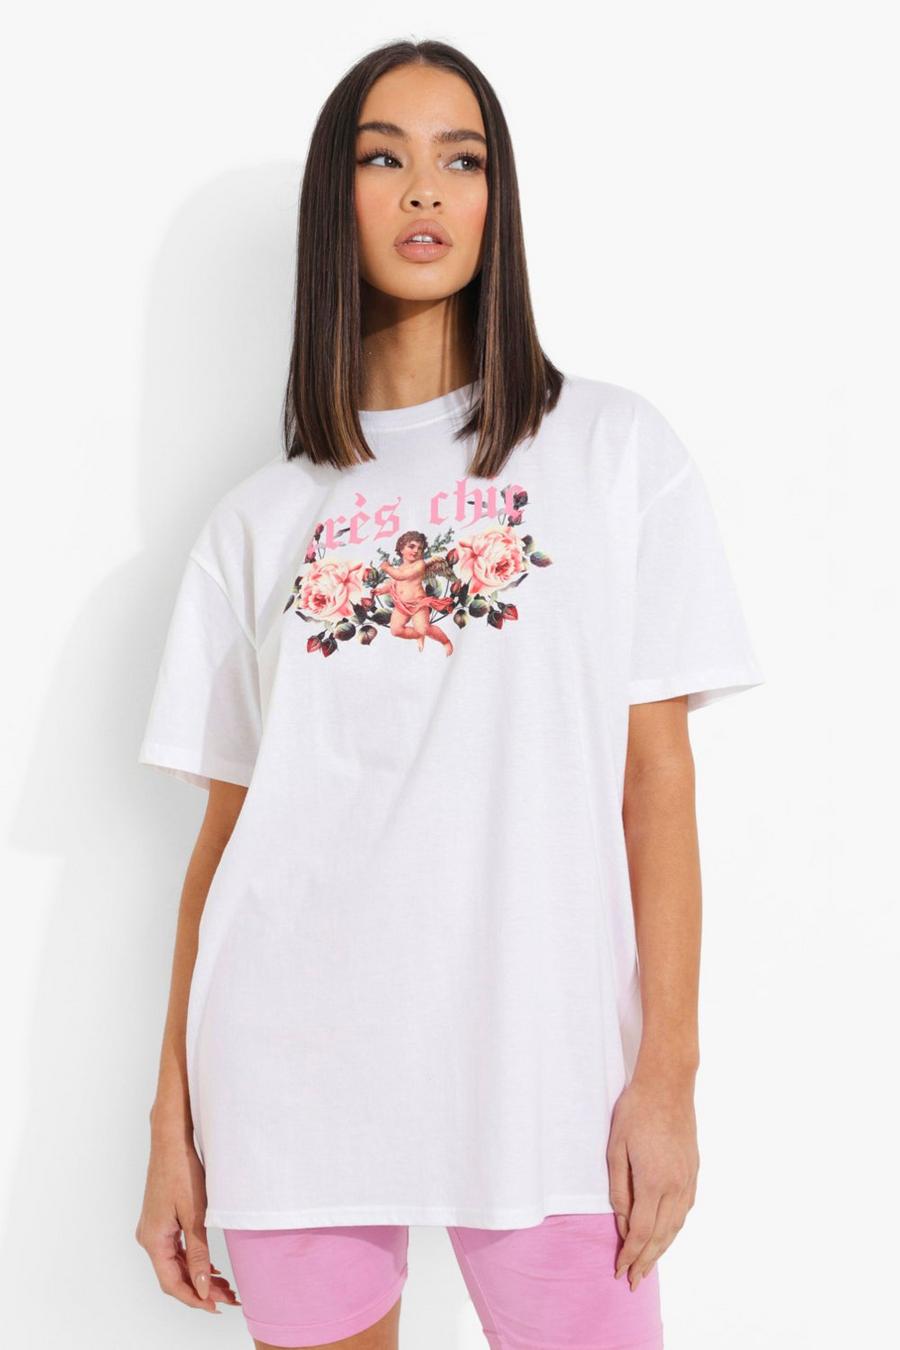 T-shirt Oversize con stampa "Tres Chic" e cherubino, White blanco image number 1